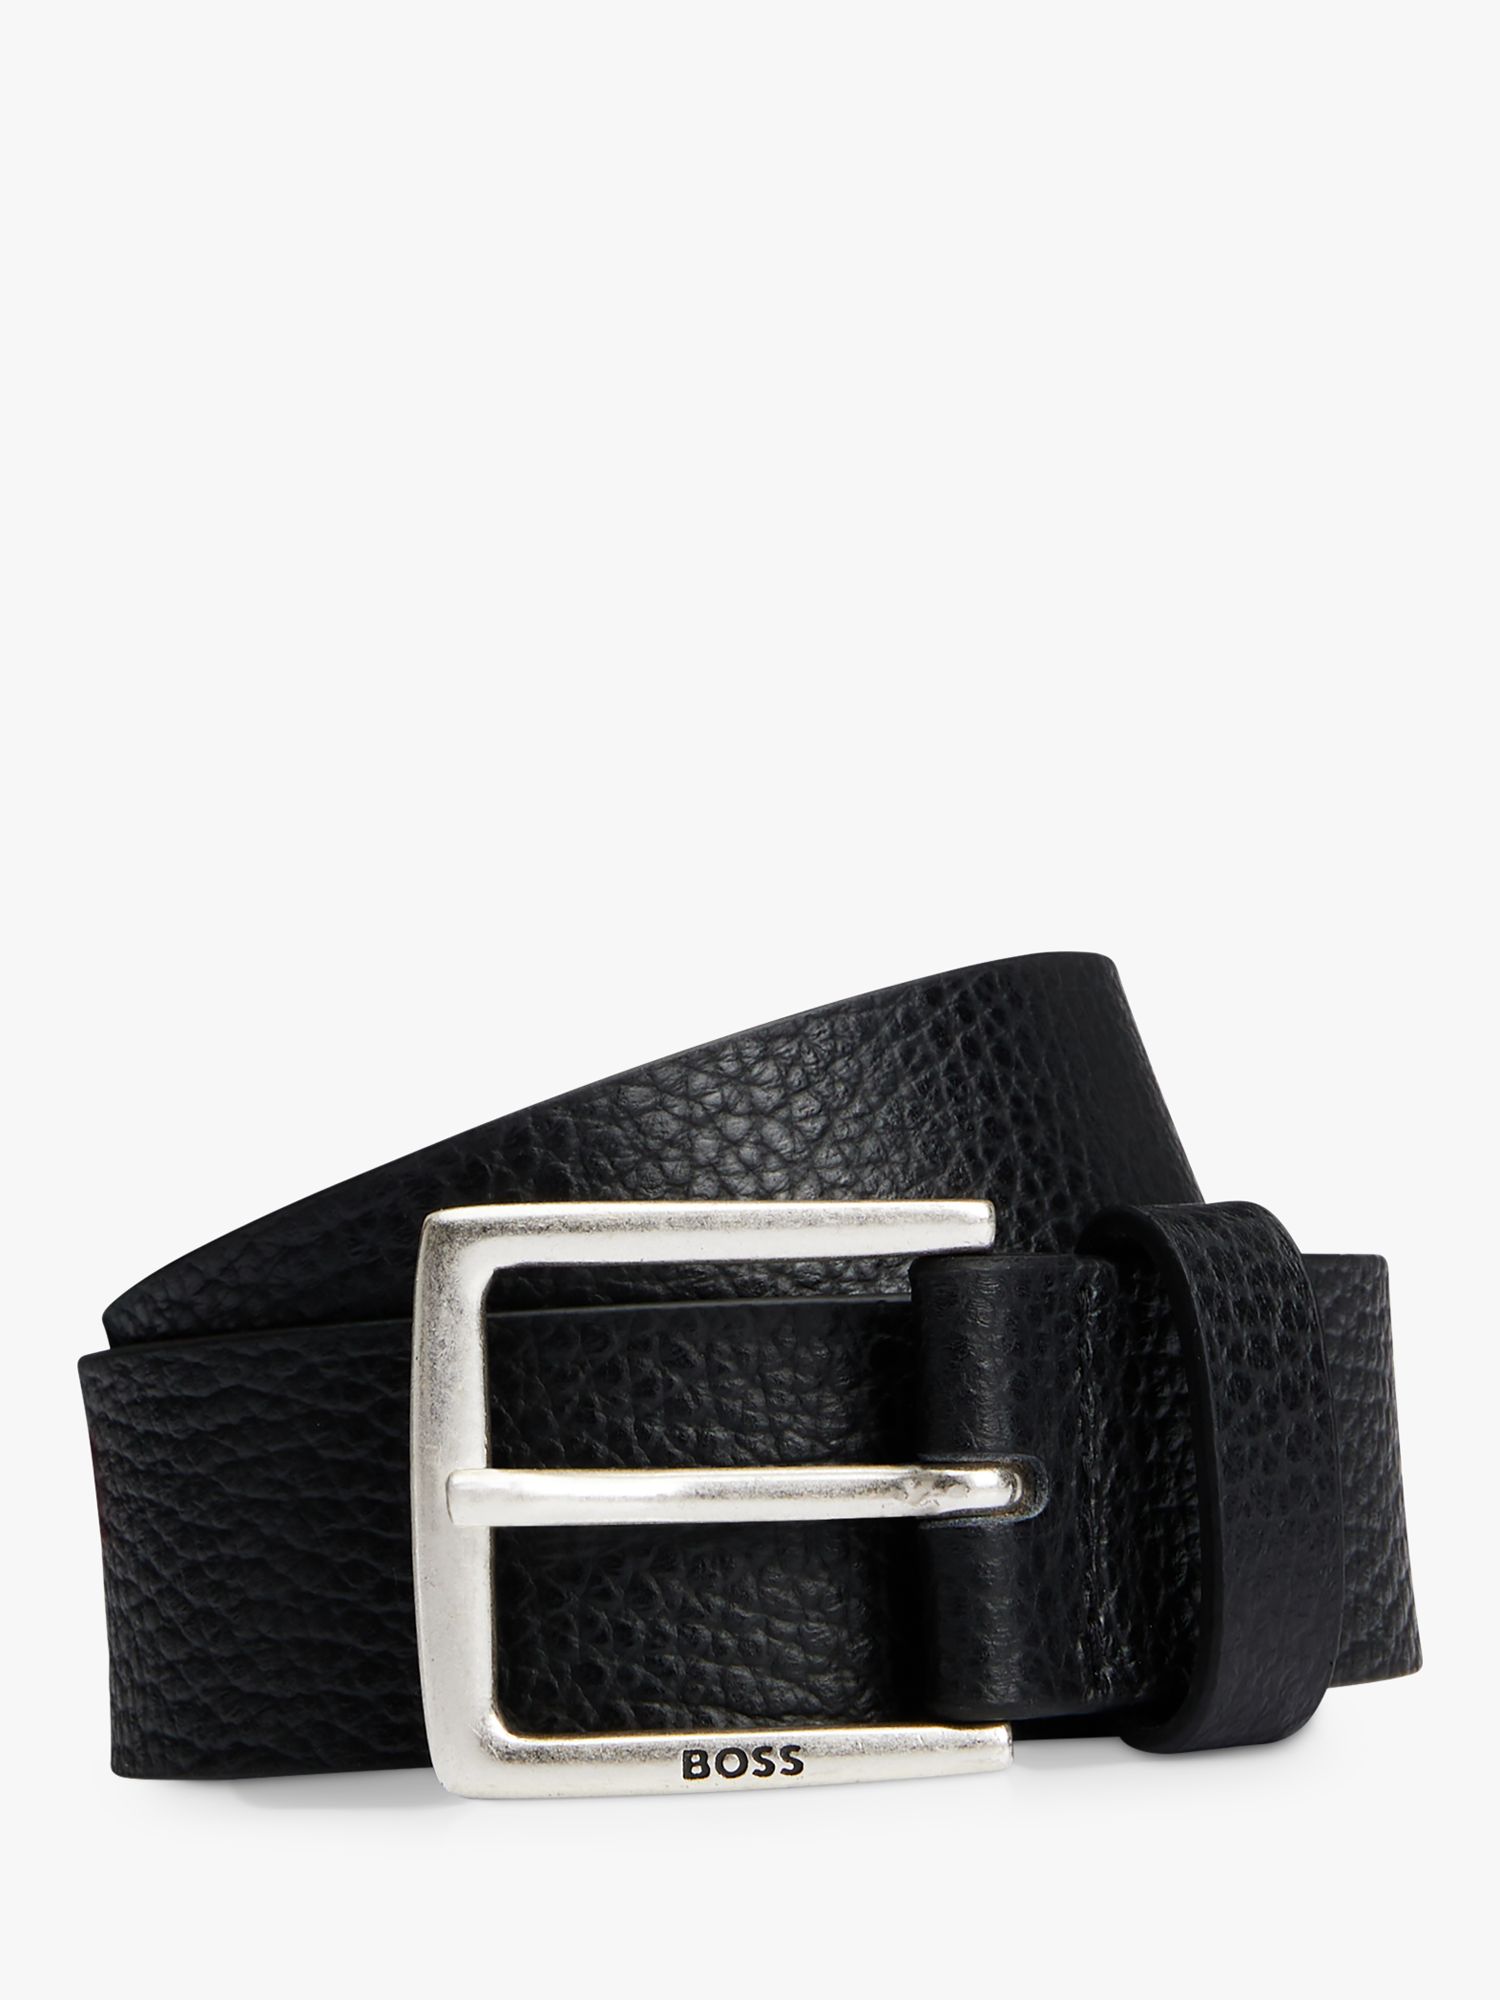 BOSS Rummi Leather Belt, Black, 30